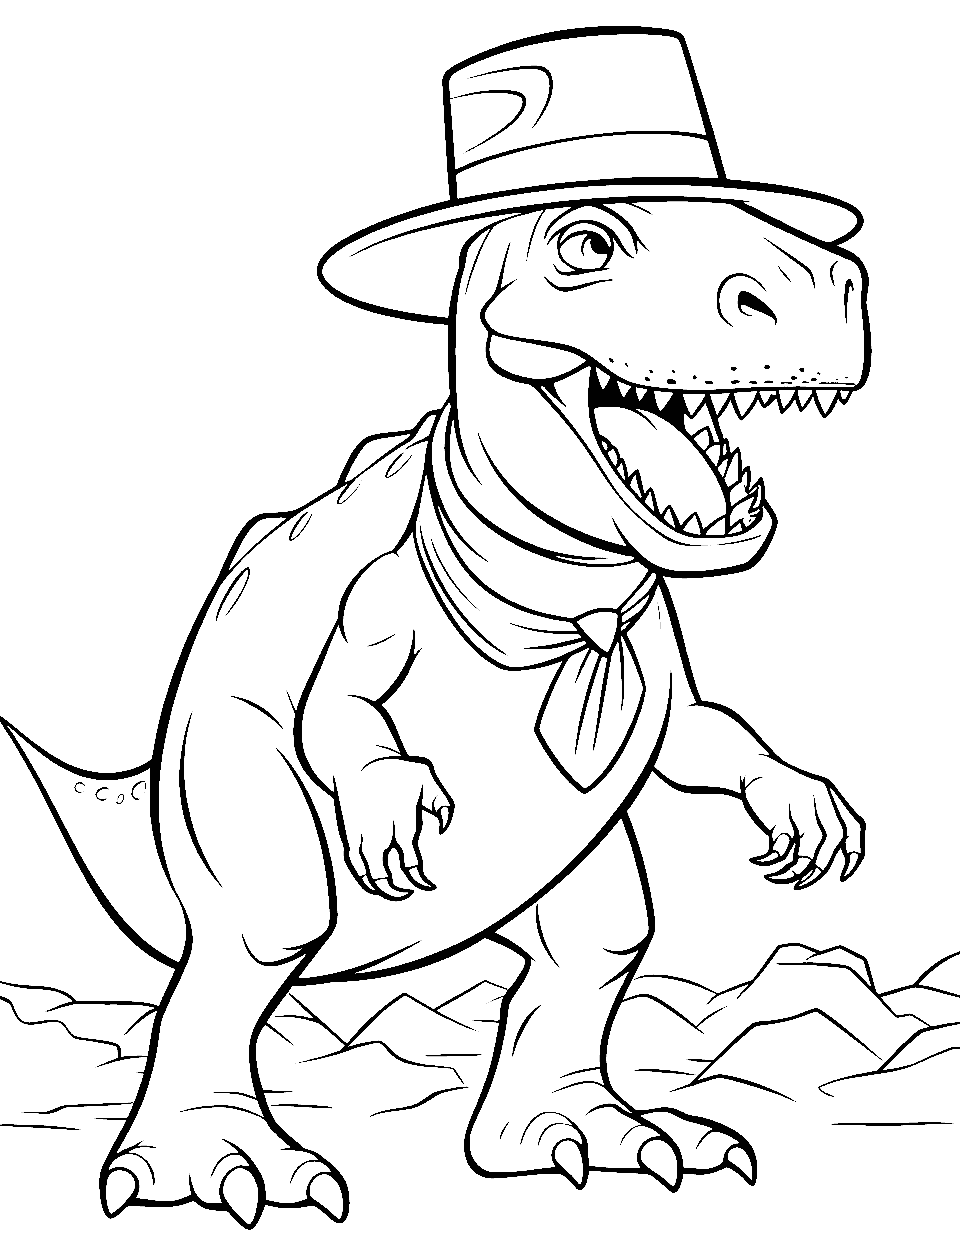 Cowboy T Rex T-rex Coloring Page - A T-Rex wearing a cowboy hat.